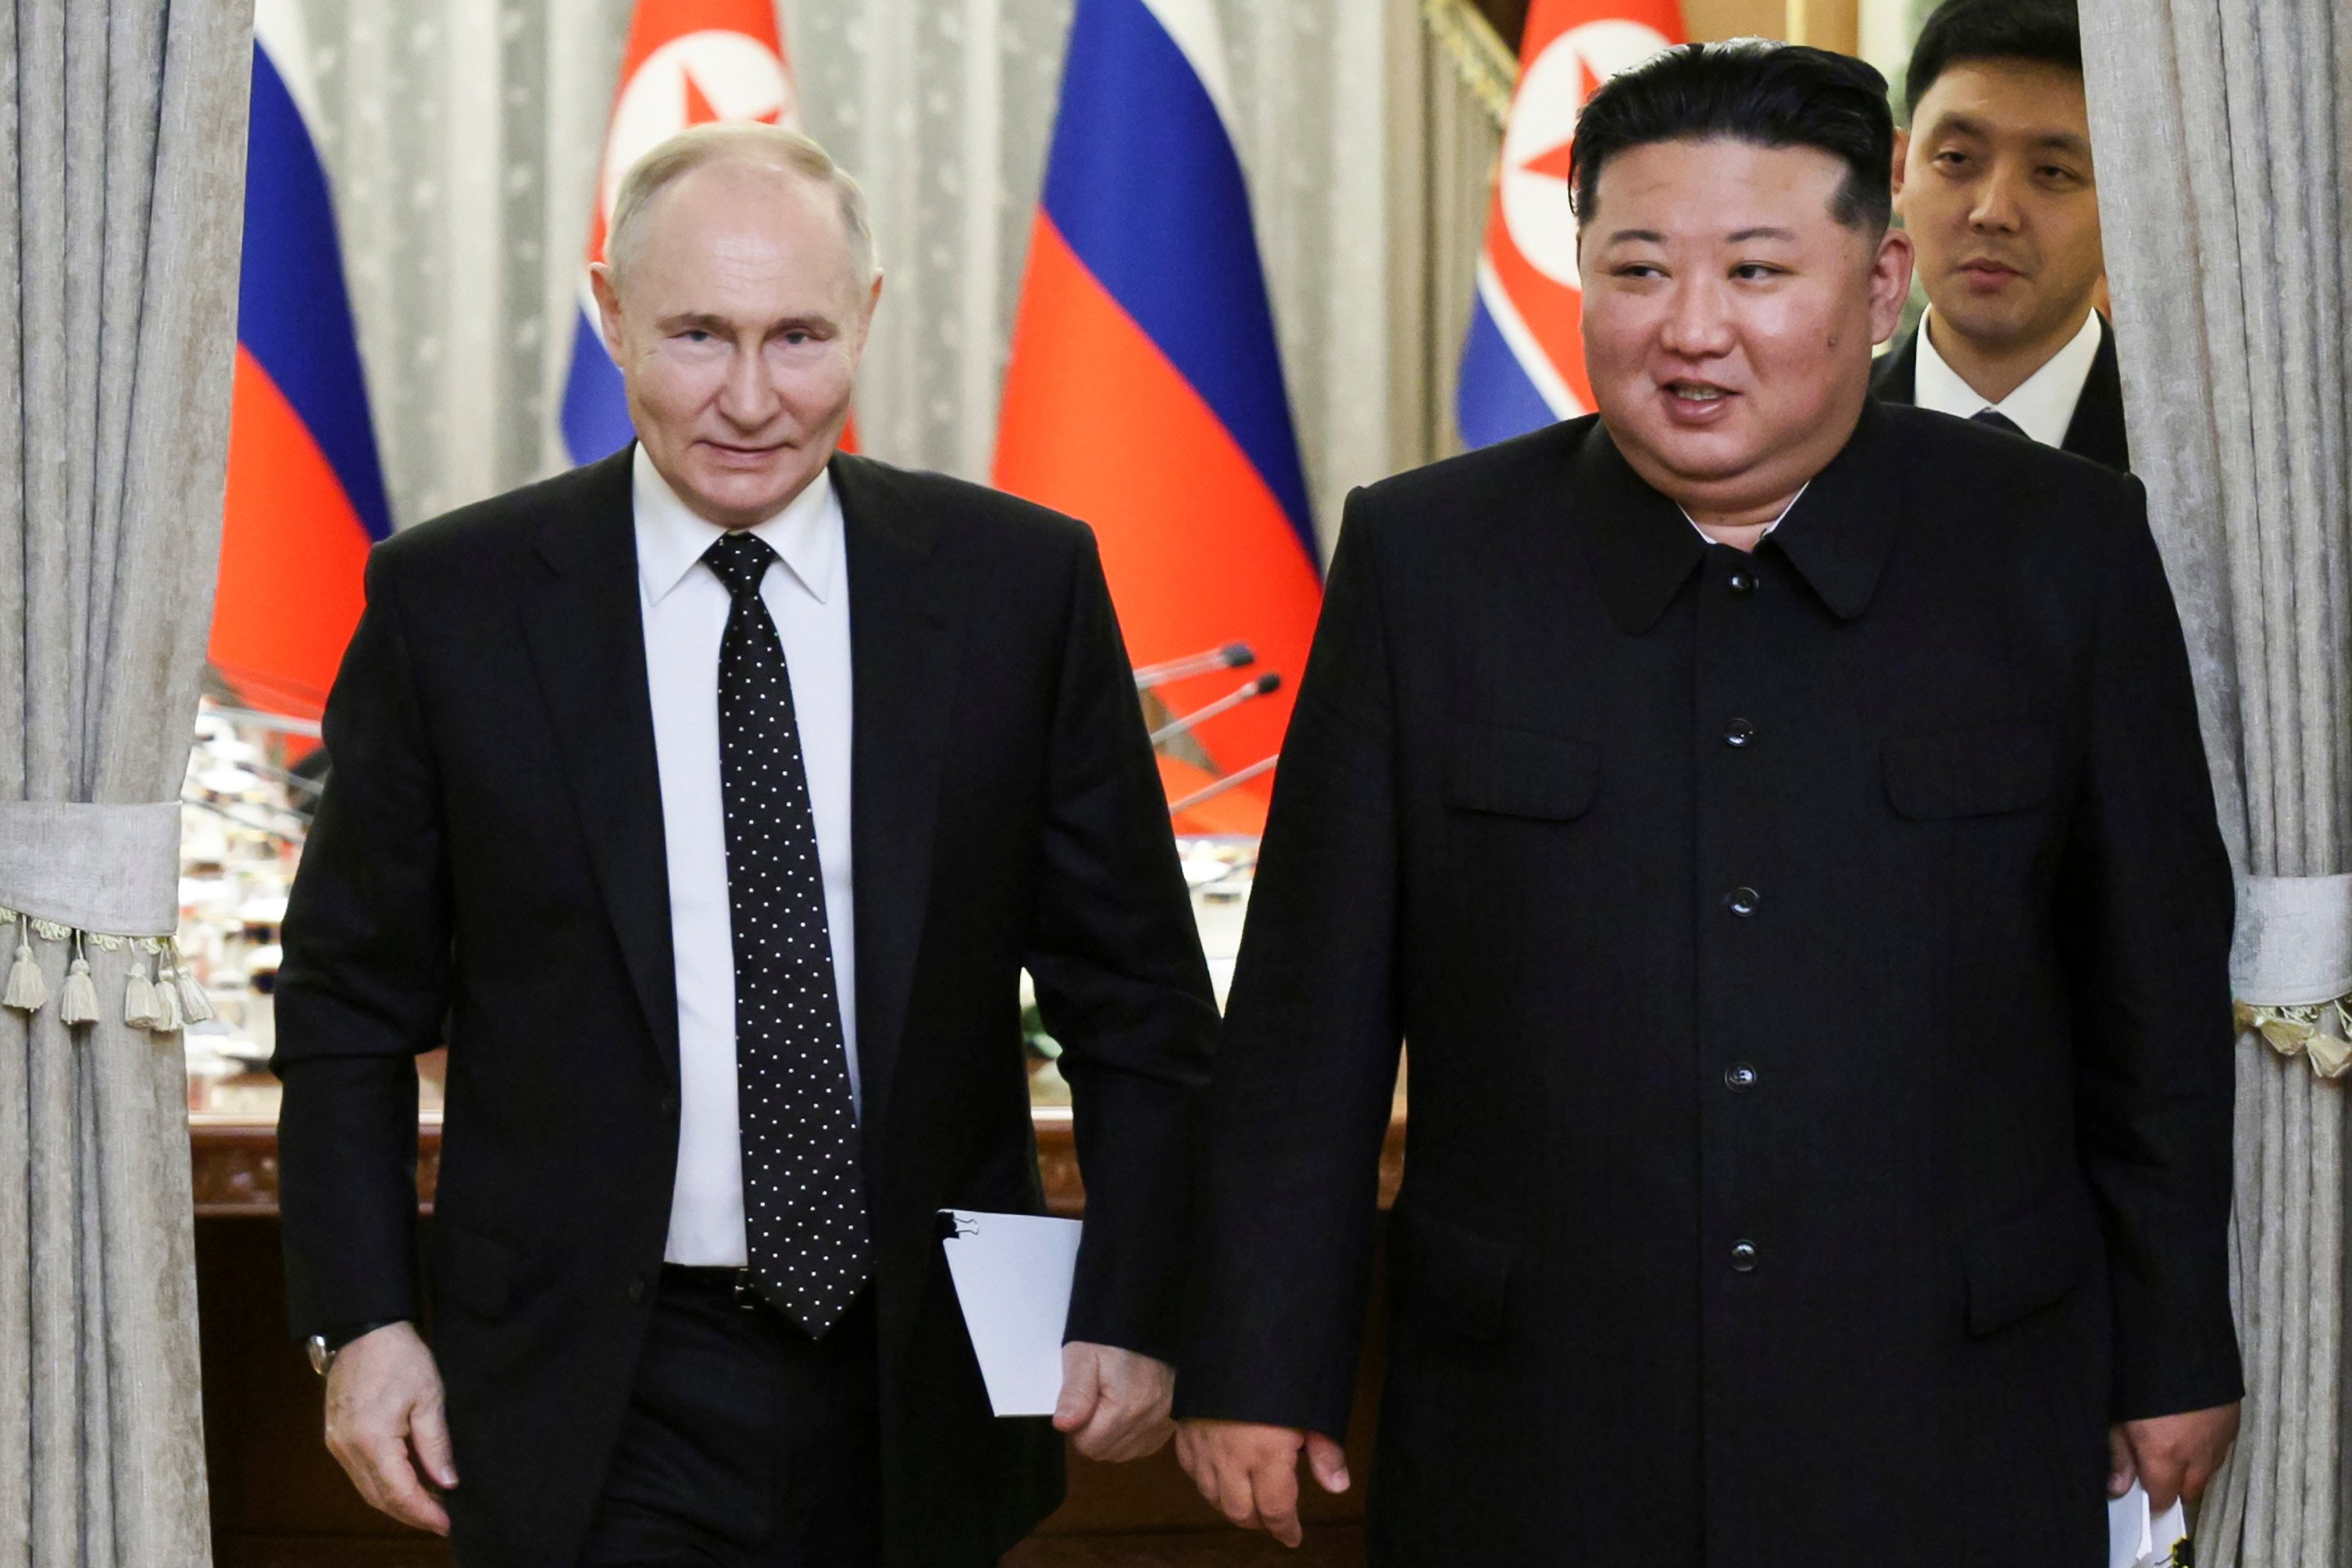 Russian President Vladimir Putin, left, and North Korea’s leader Kim Jong-un meet in Pyongyang, North Korea on Wednesday. Photo: Kremlin Pool via AP